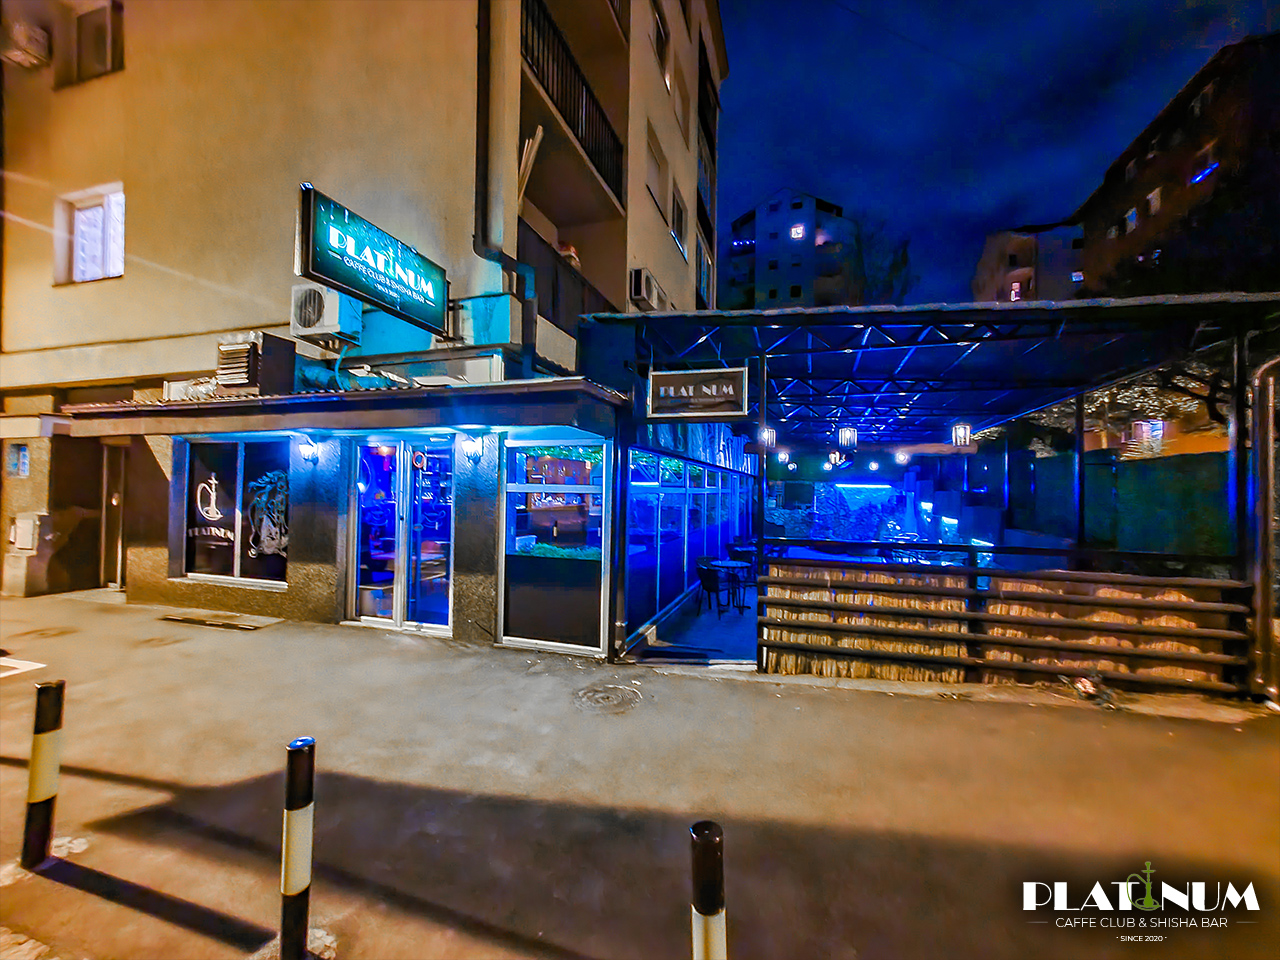 Photo 1 - PLATINUM CAFFE CLUB & SHISHA BAR Bars and night-clubs Belgrade